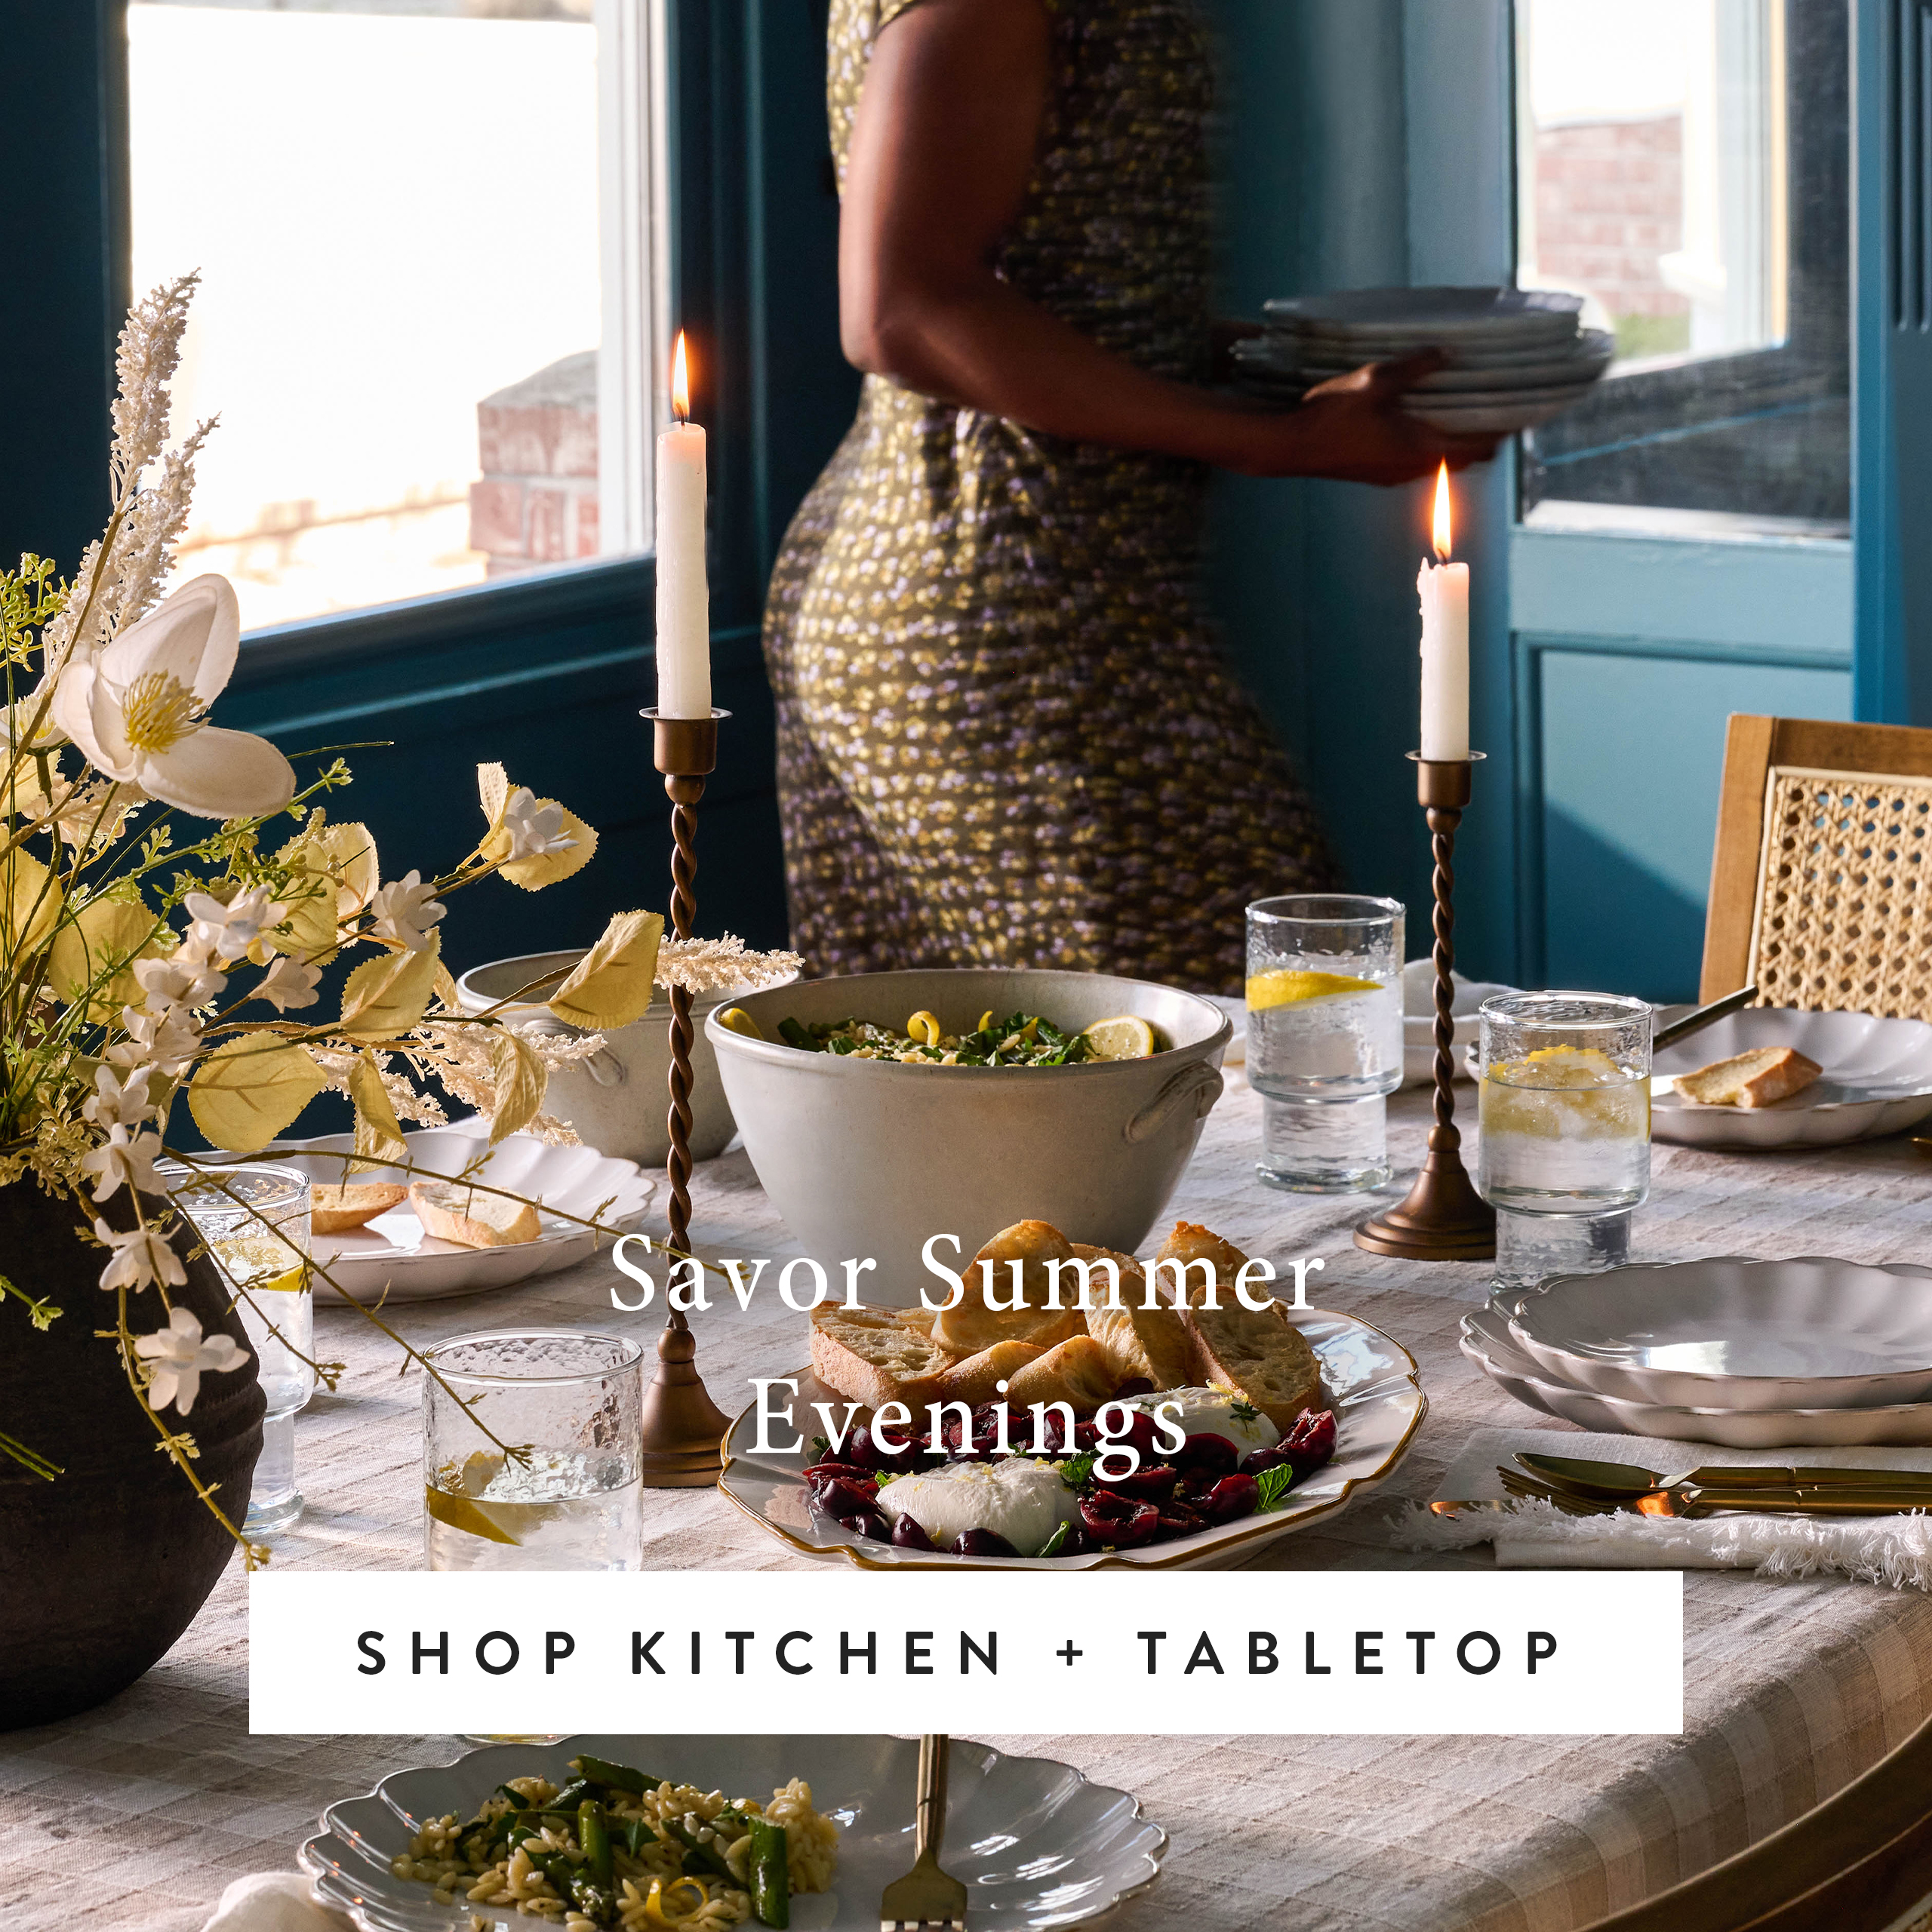 savor summer evenings - shop kitchen + tabletop